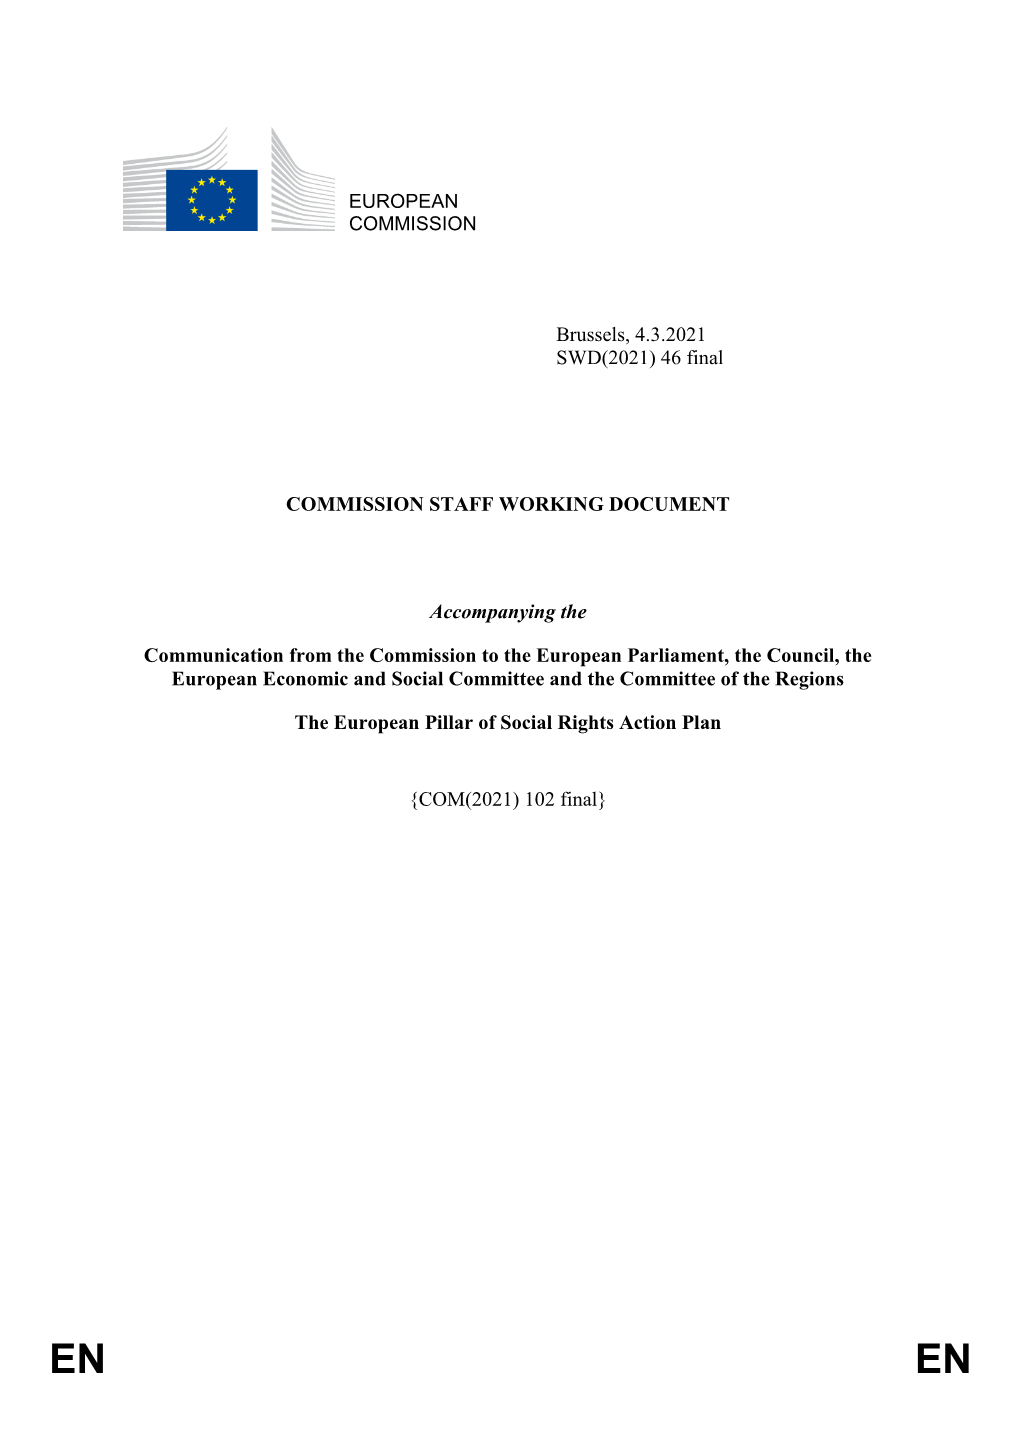 EUROPEAN COMMISSION Brussels, 4.3.2021 SWD(2021) 46 Final